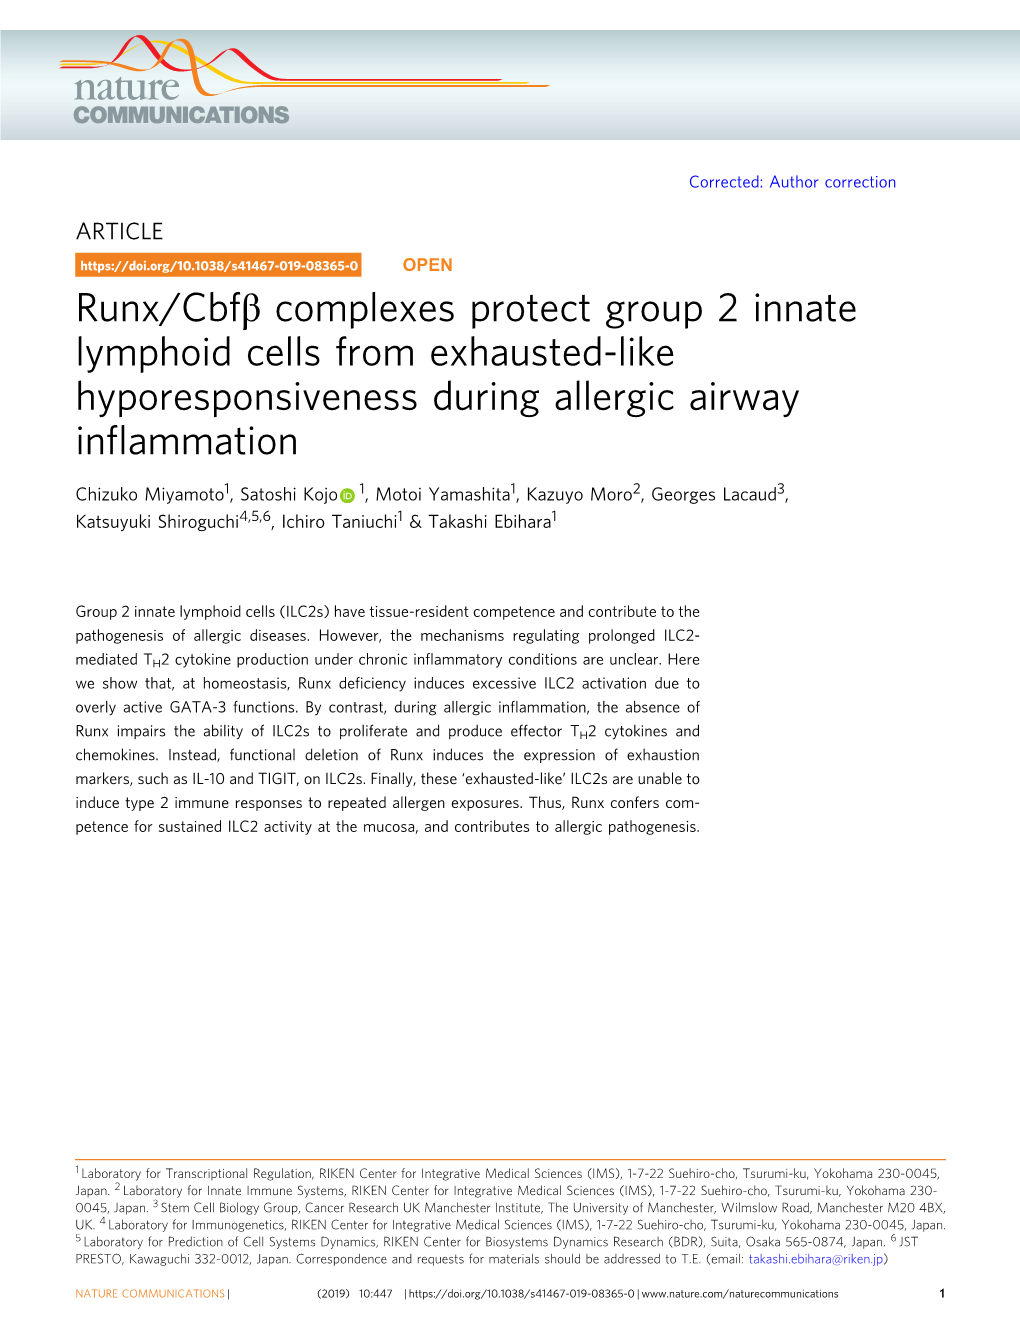 Runx/Cbfî² Complexes Protect Group 2 Innate Lymphoid Cells From